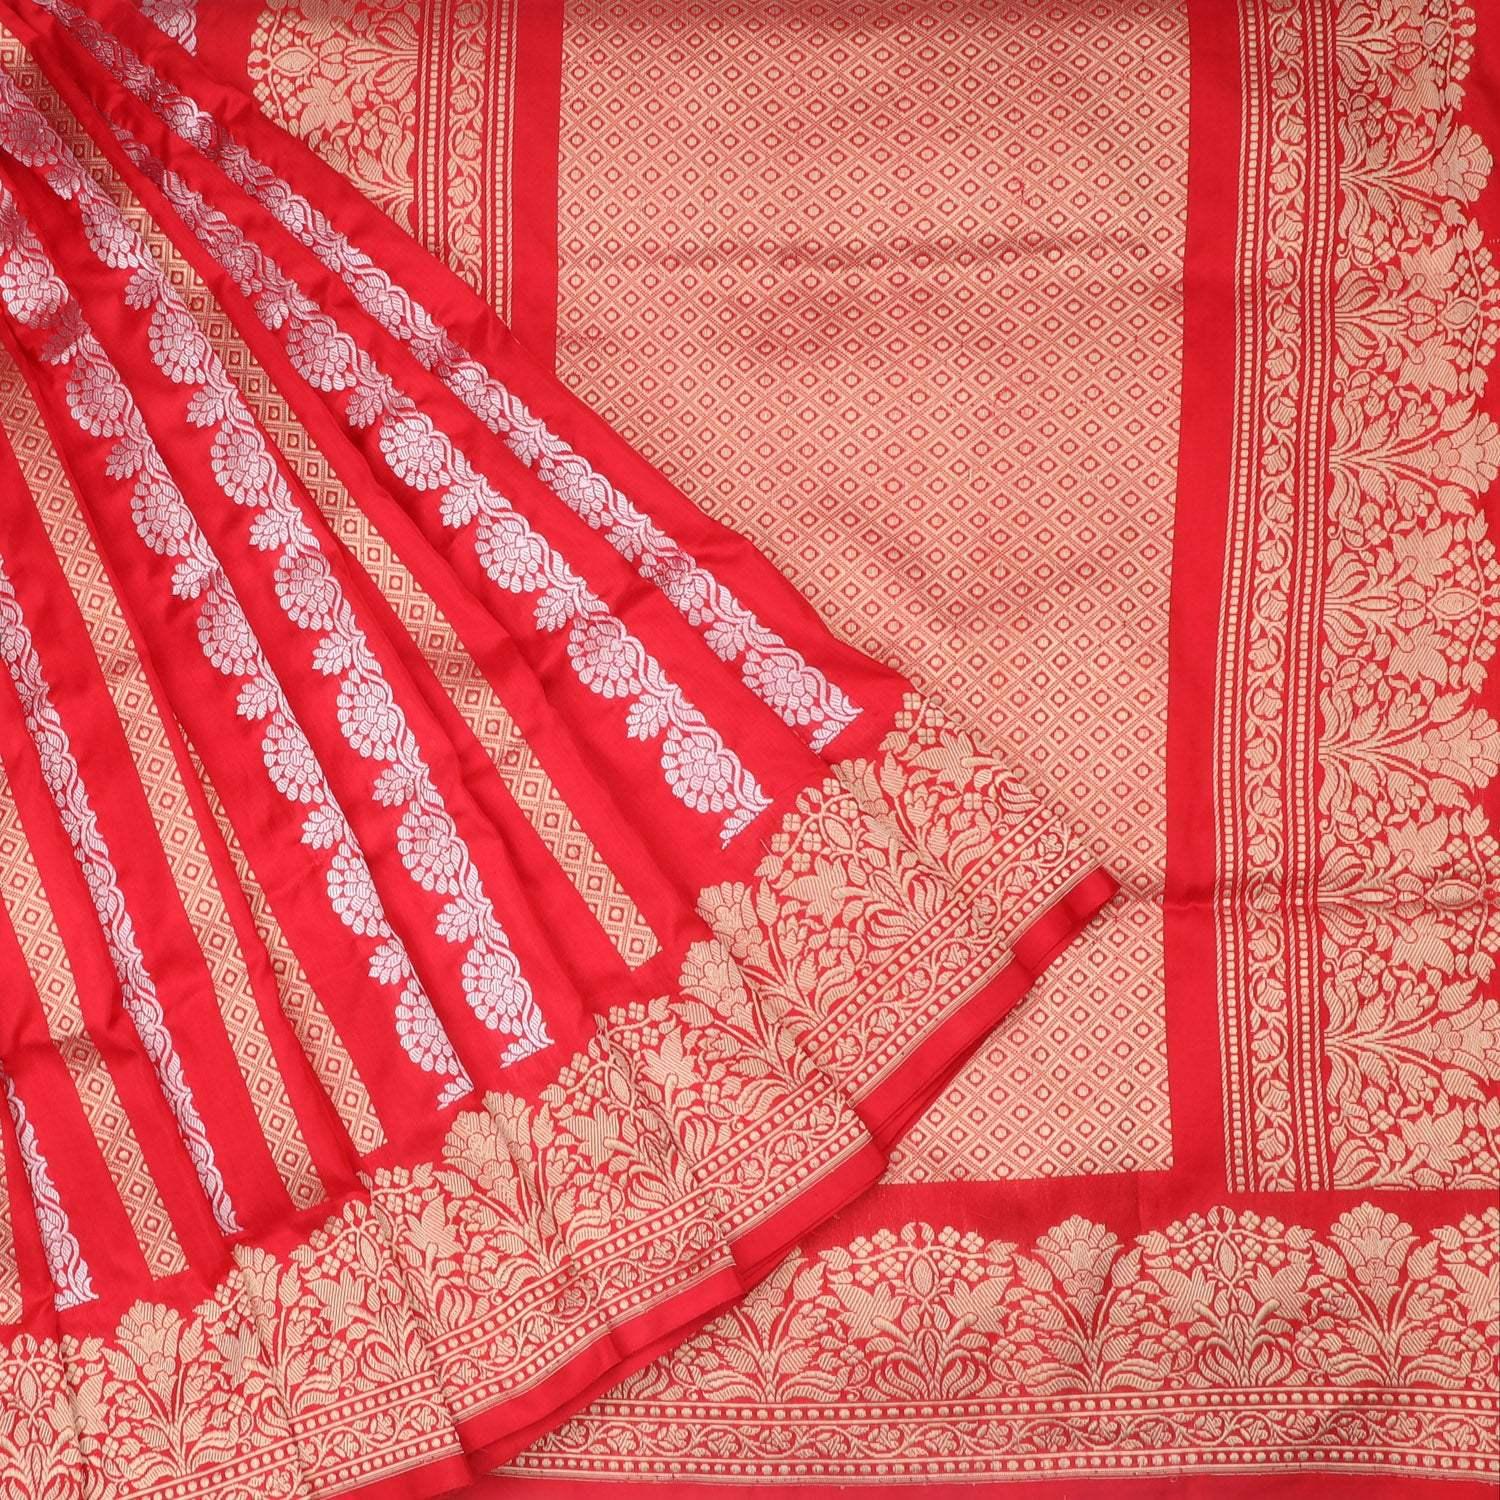 vibrant red banarasi silk saree with floral stripes pattern